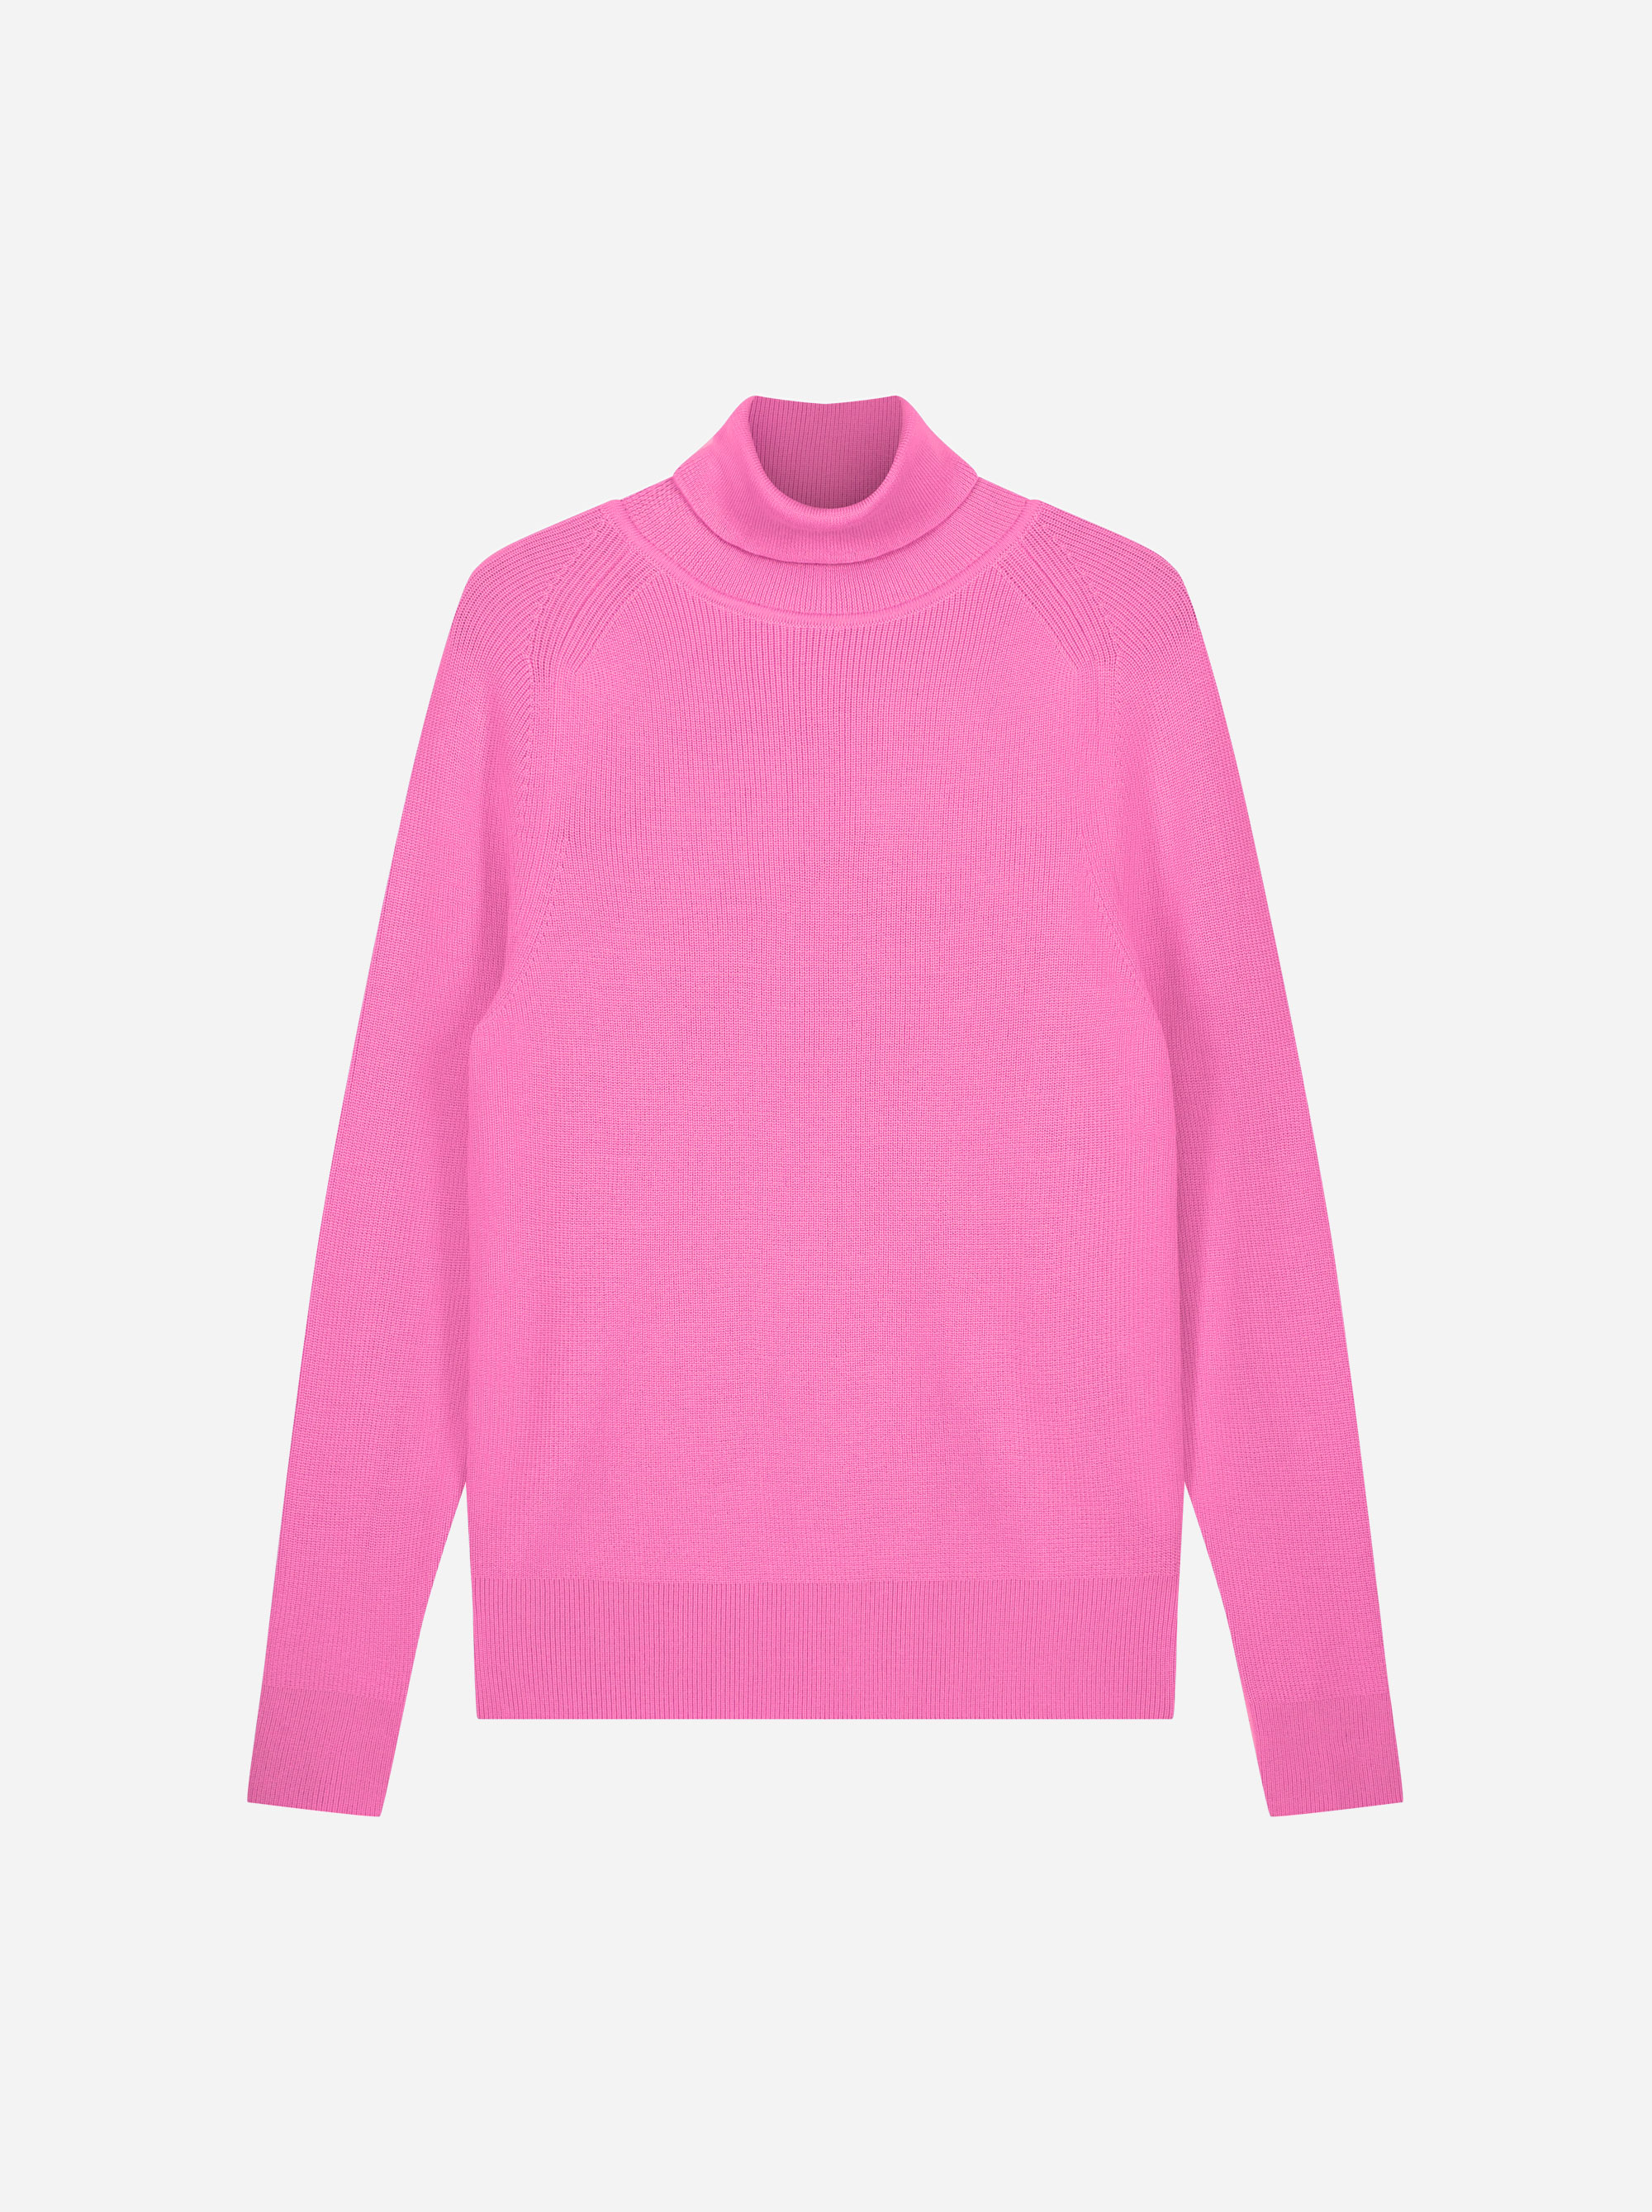 Teym - Turtleneck - The Merino Sweater - Men - Bright Pink - 3